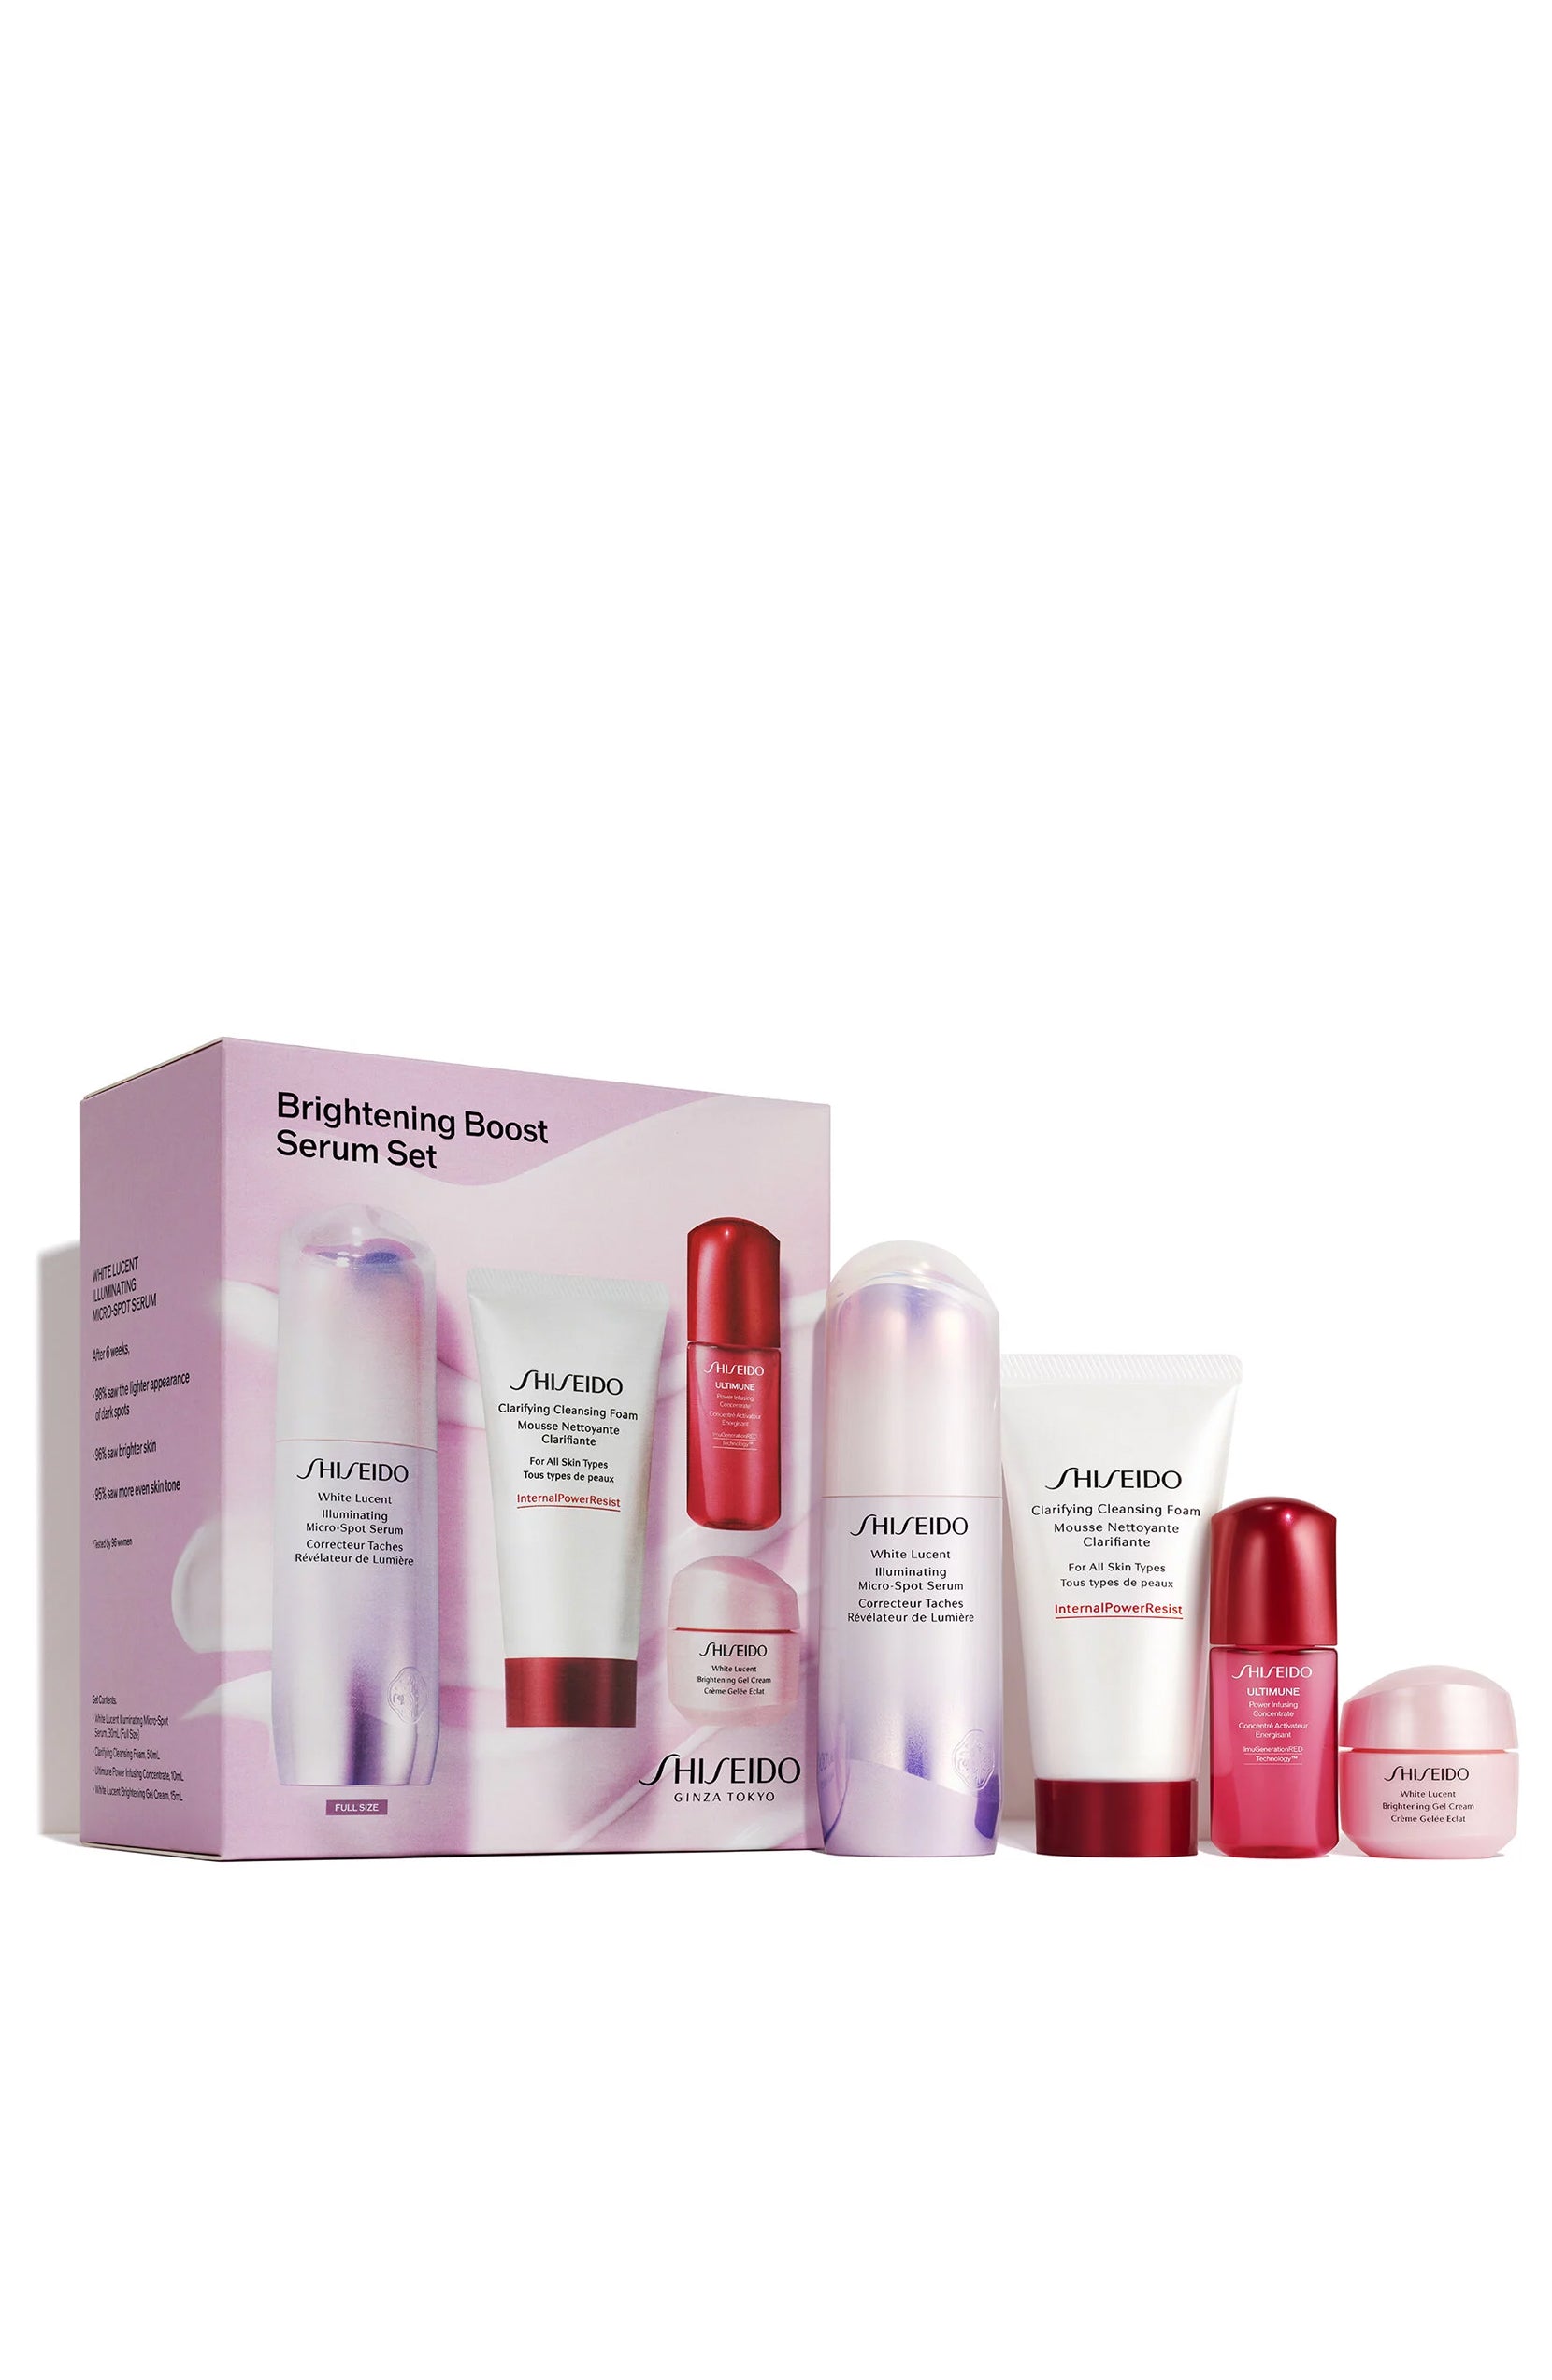 Shiseido Brightening Boost Serum Set ($197 Value)